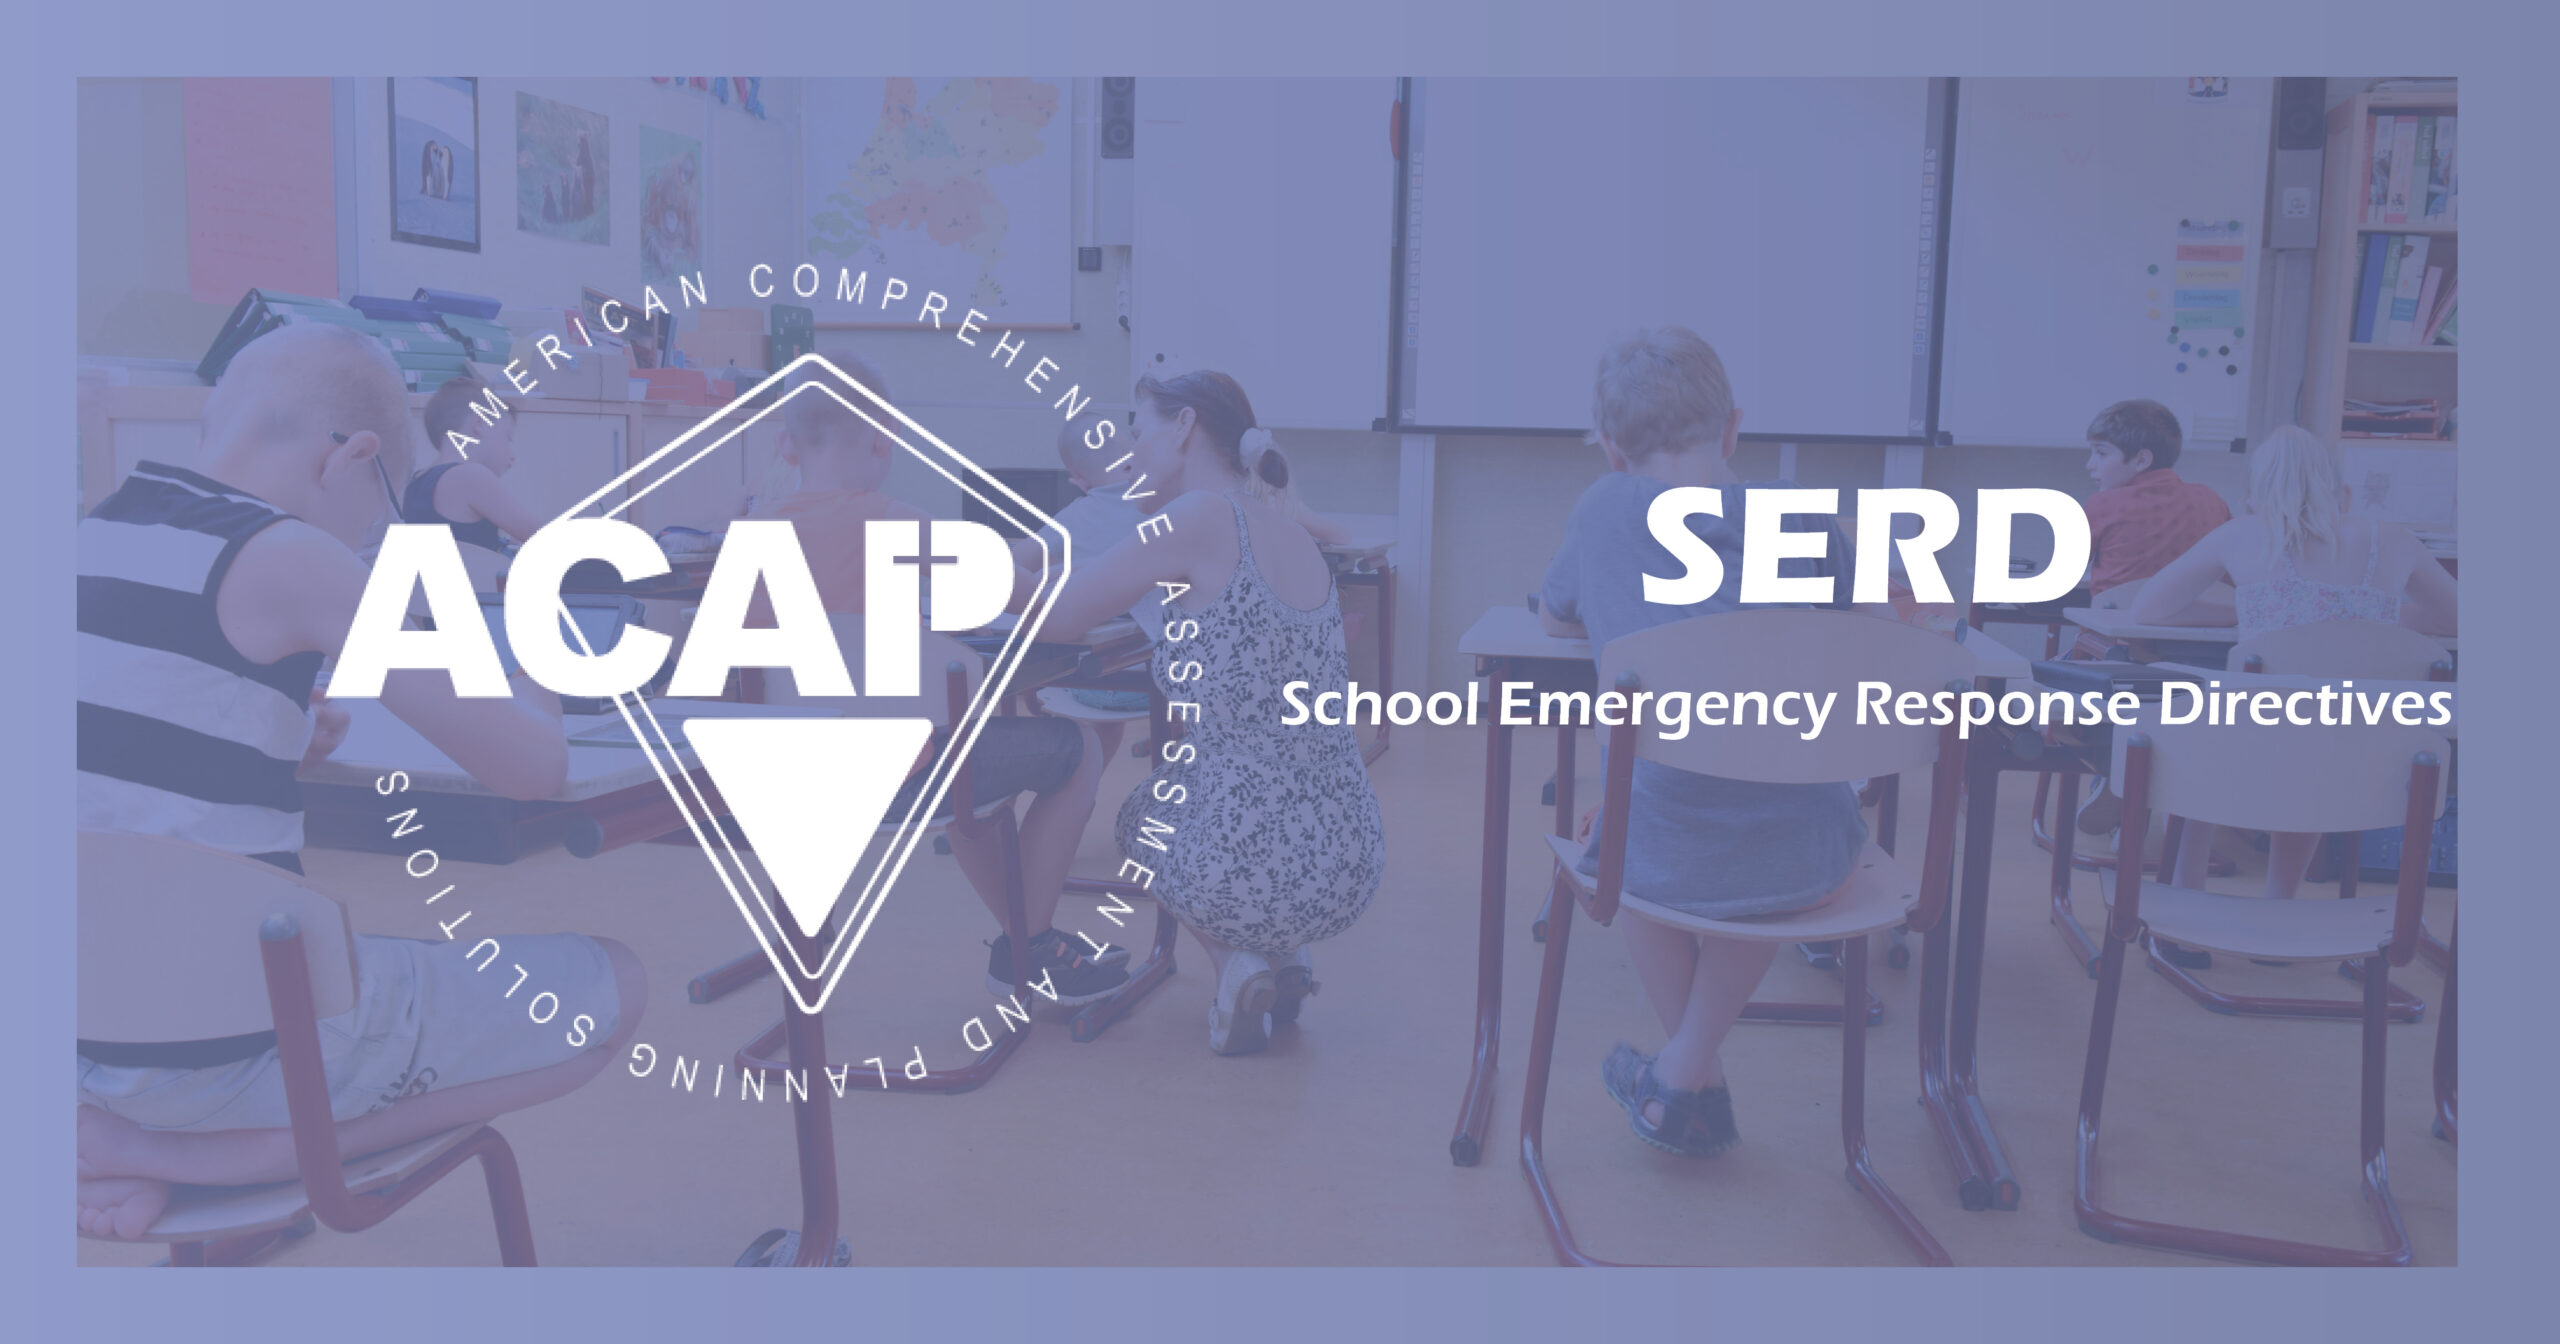 ACAP Solutions logo with SERD - School Emergency Response Directives